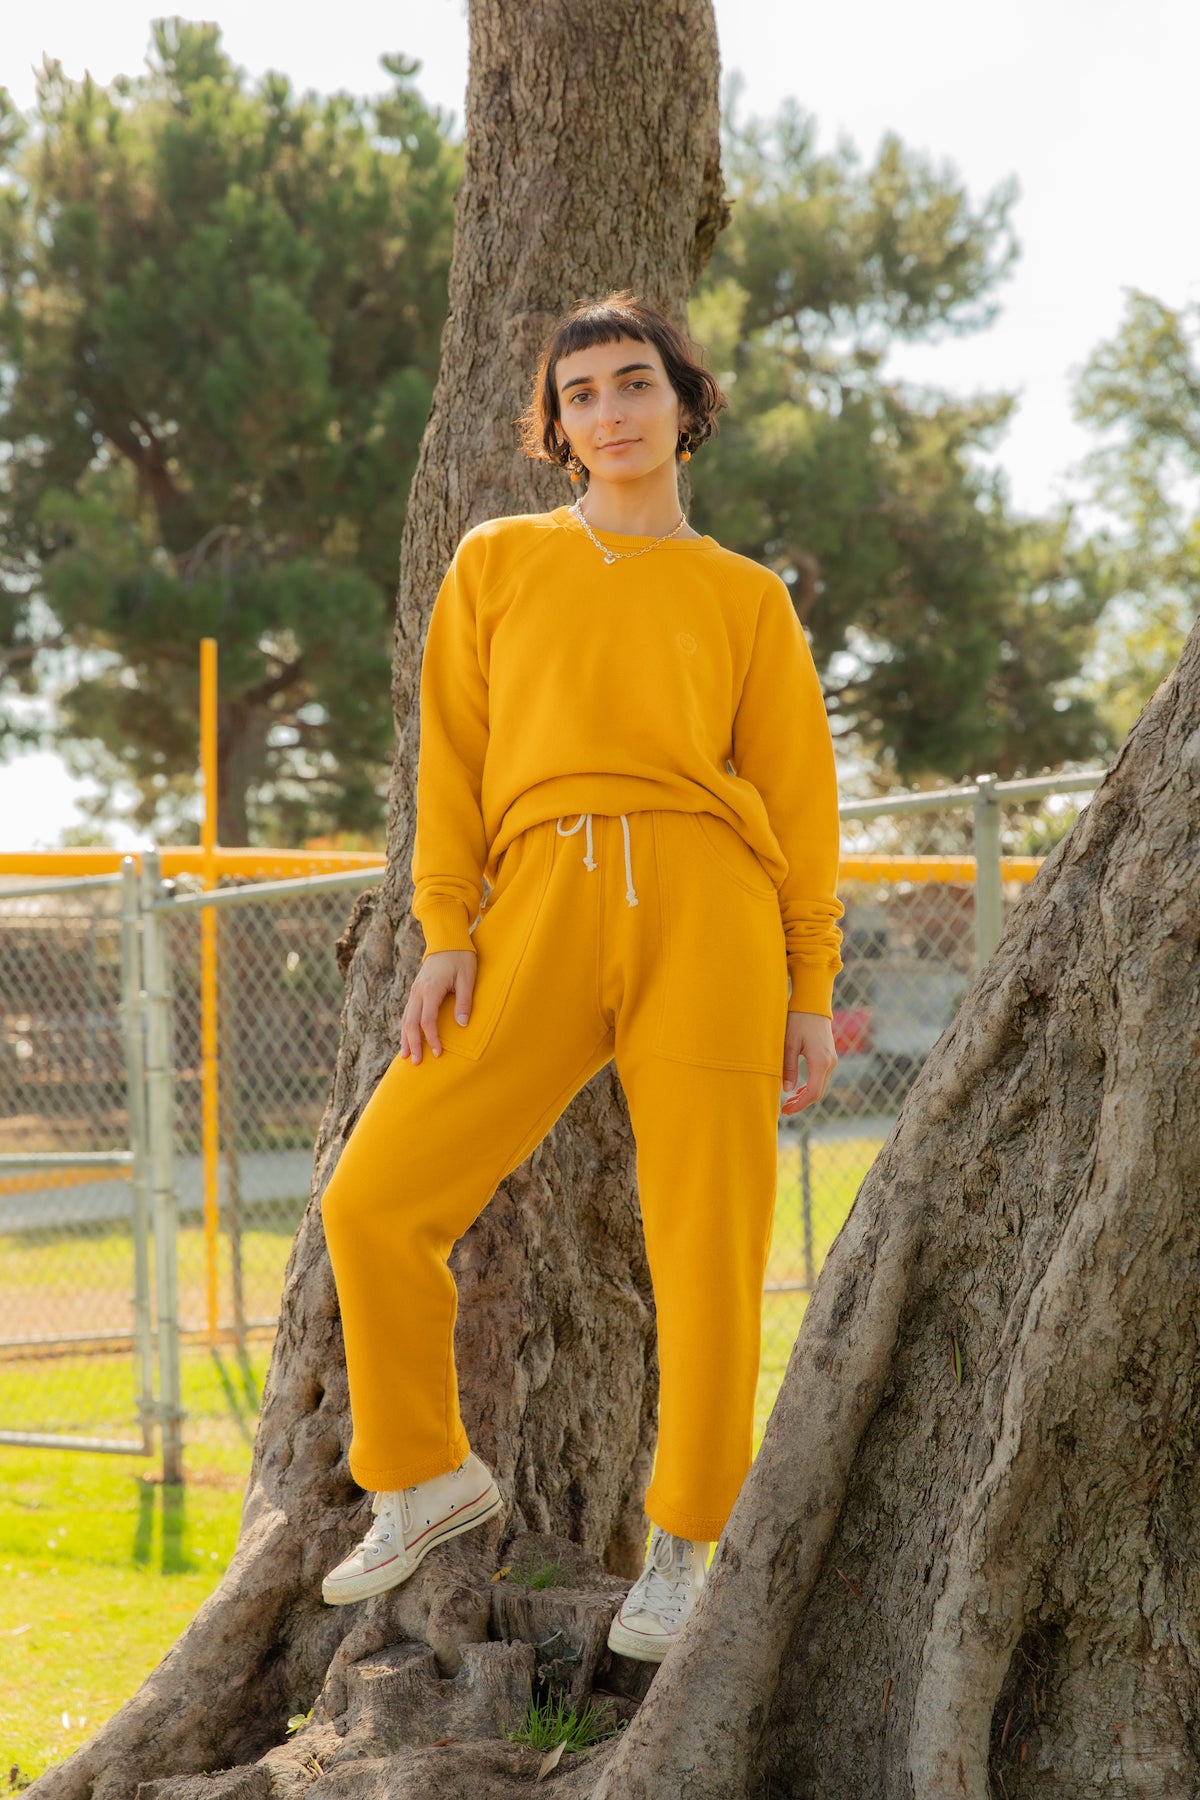 Soraya is wearing Heavyweight Crew in Sunshine Yellow and Cropped Rolled Cuff Sweatpants in Sunshine Yellow